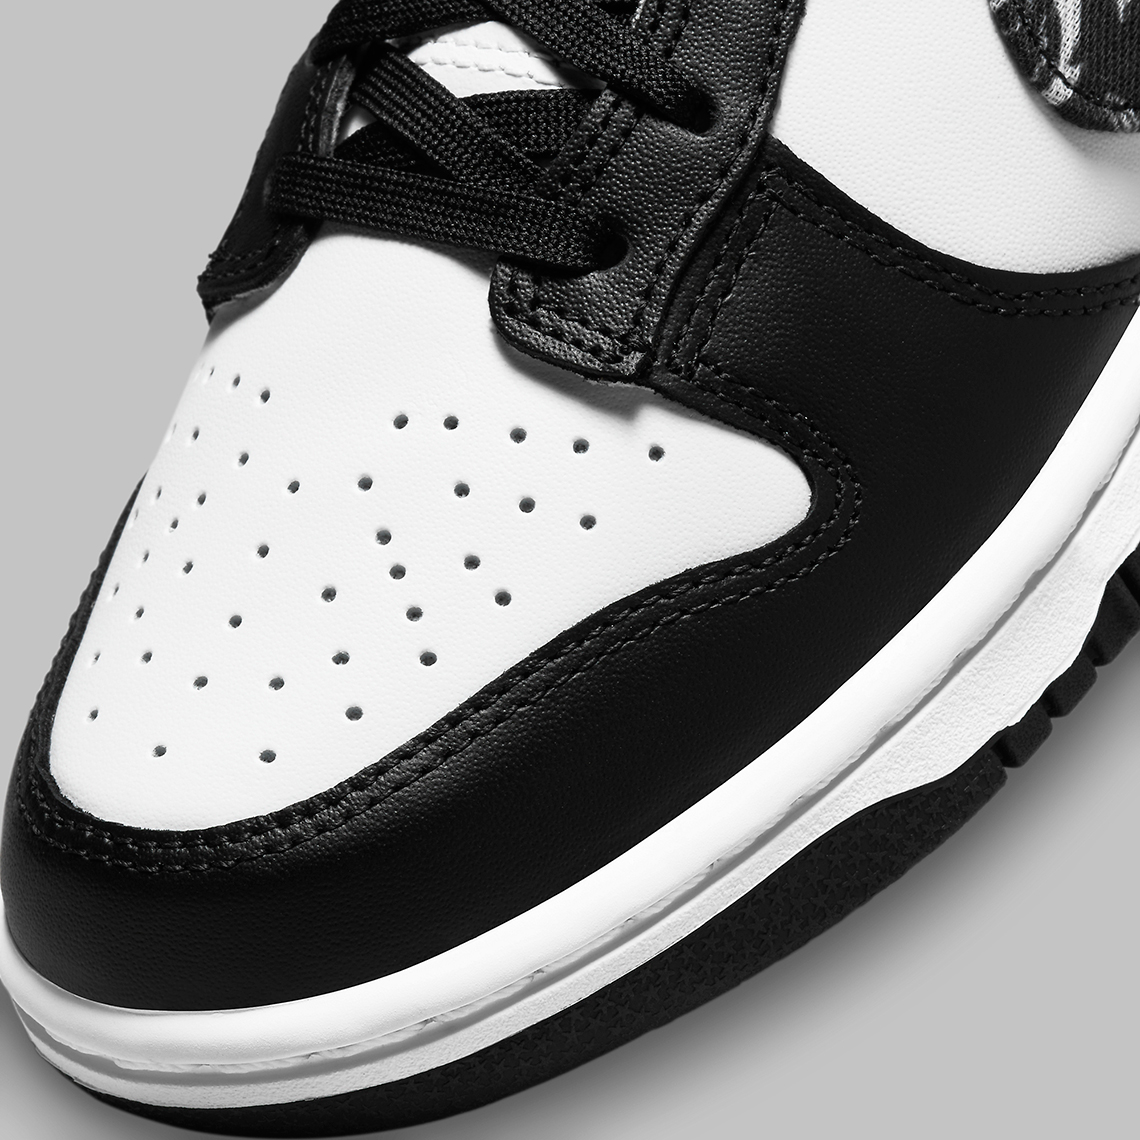 hurricane shoes nike white sneakers sandals sale Black White Paisley Panda Dh4401 100 5